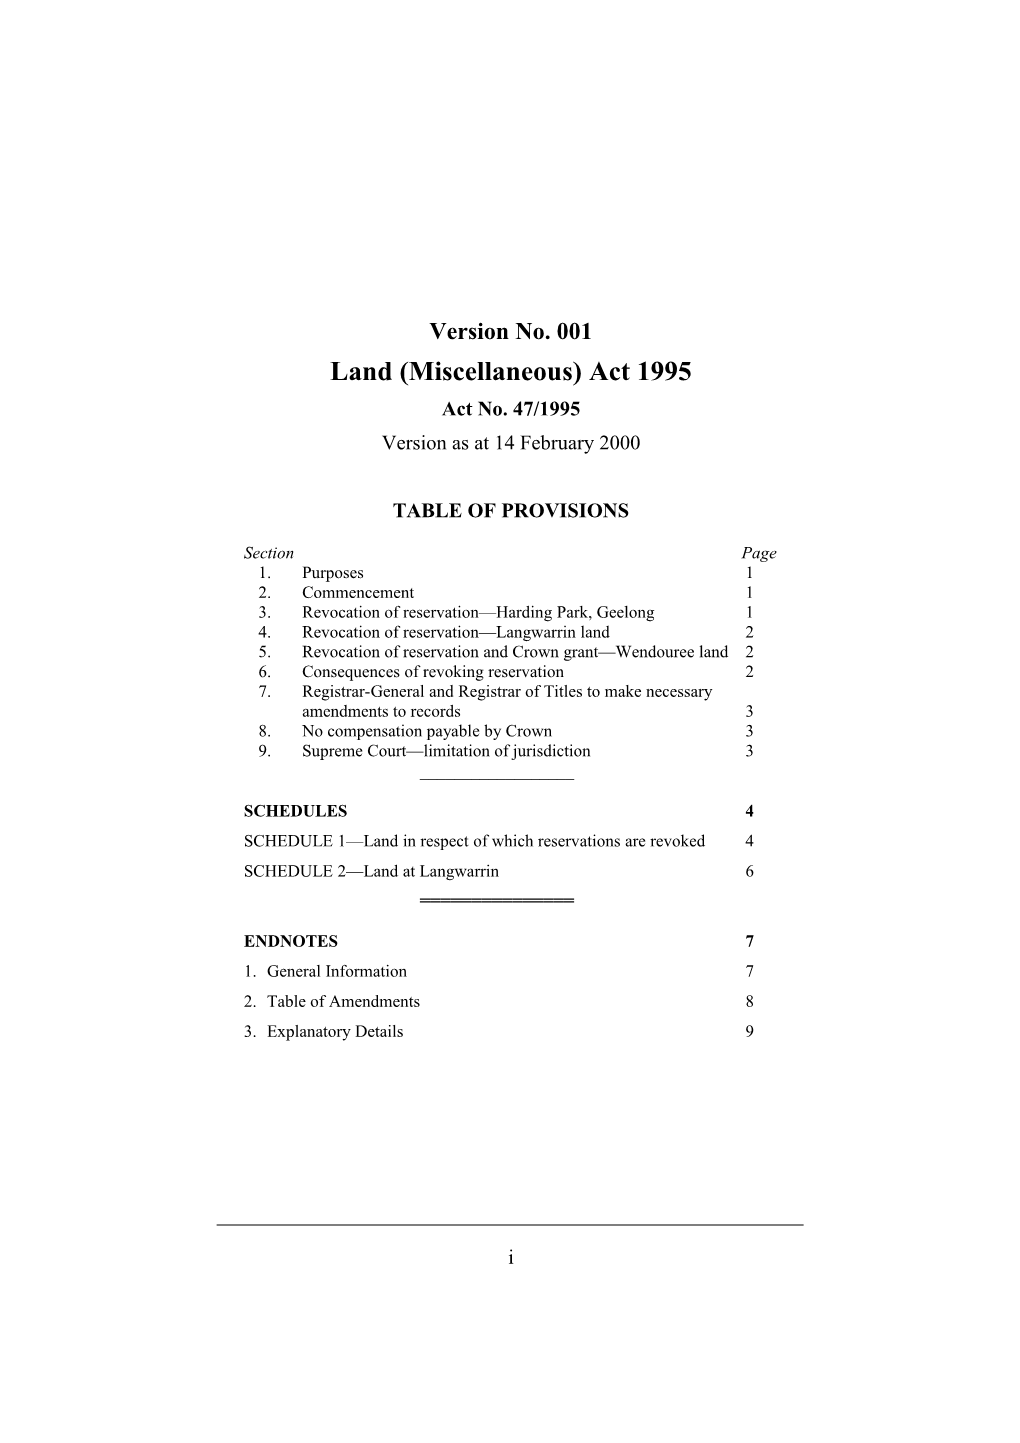 Land (Miscellaneous) Act 1995